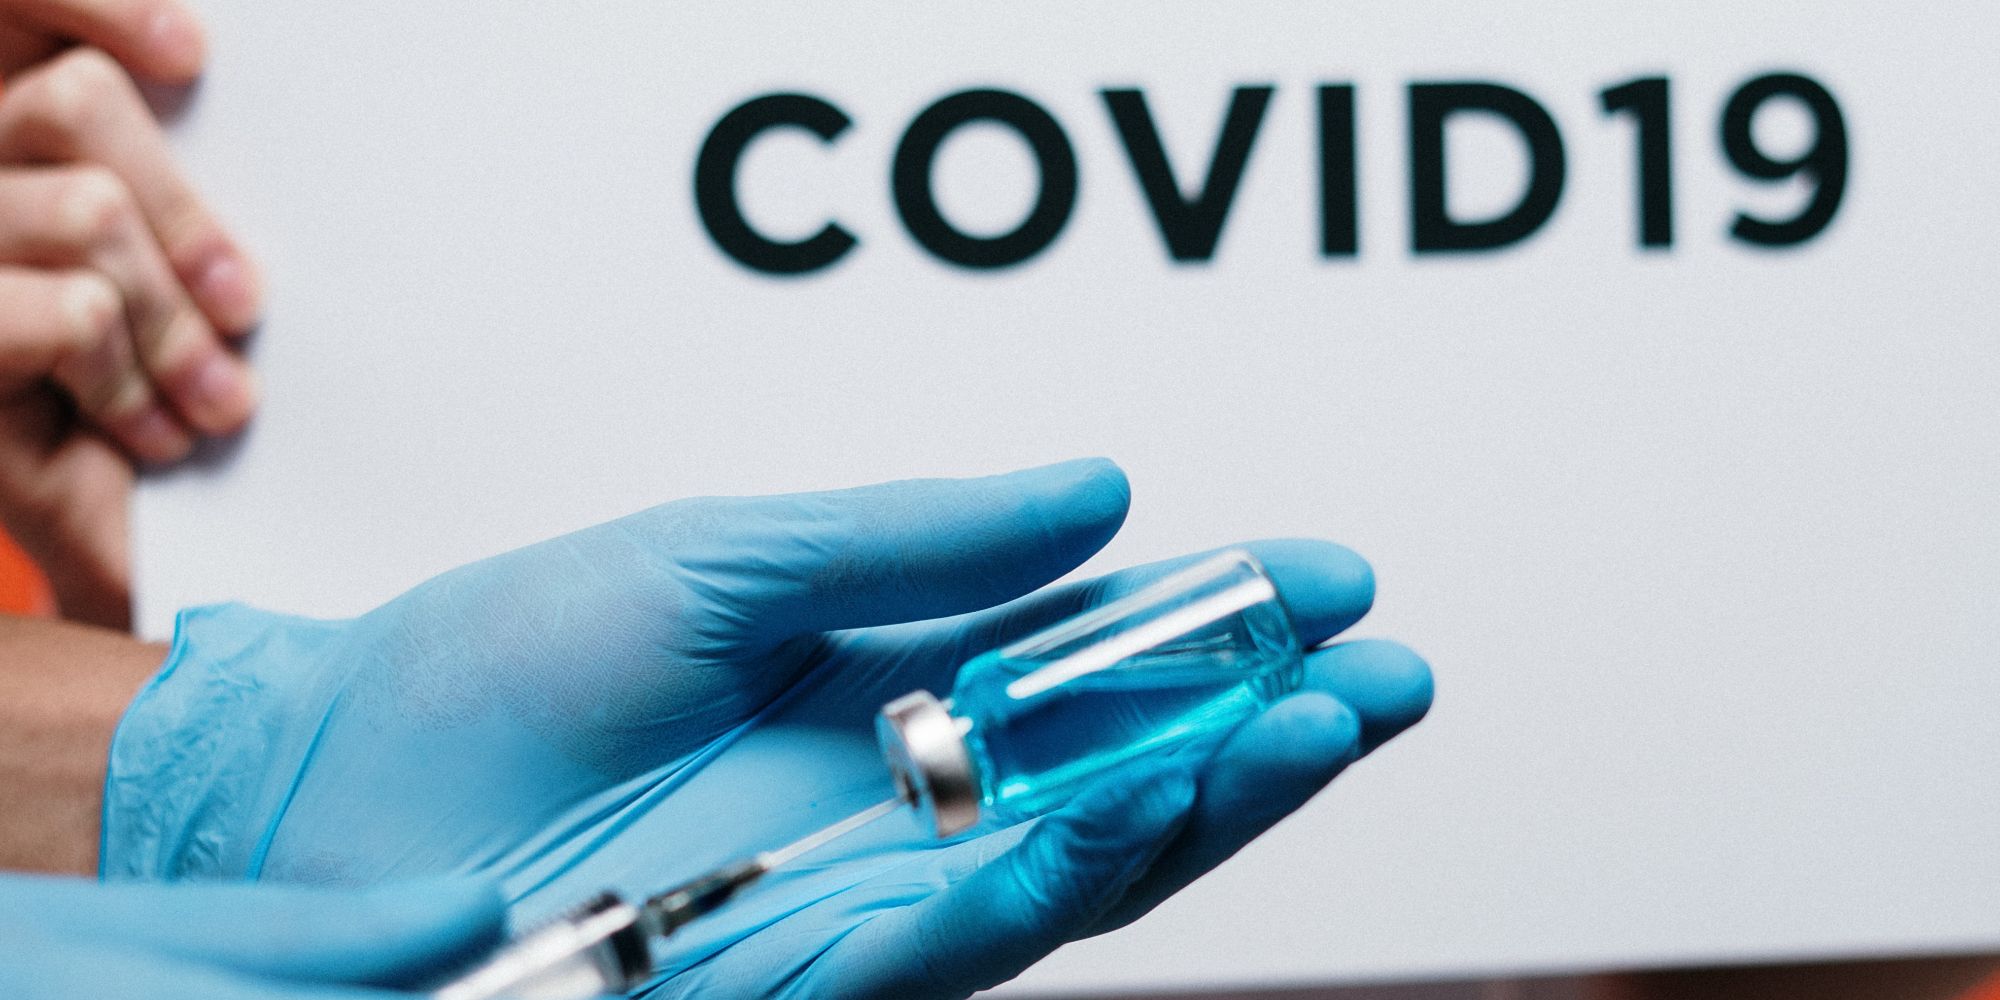 Photo of someone administering a COVID-19 vaccine